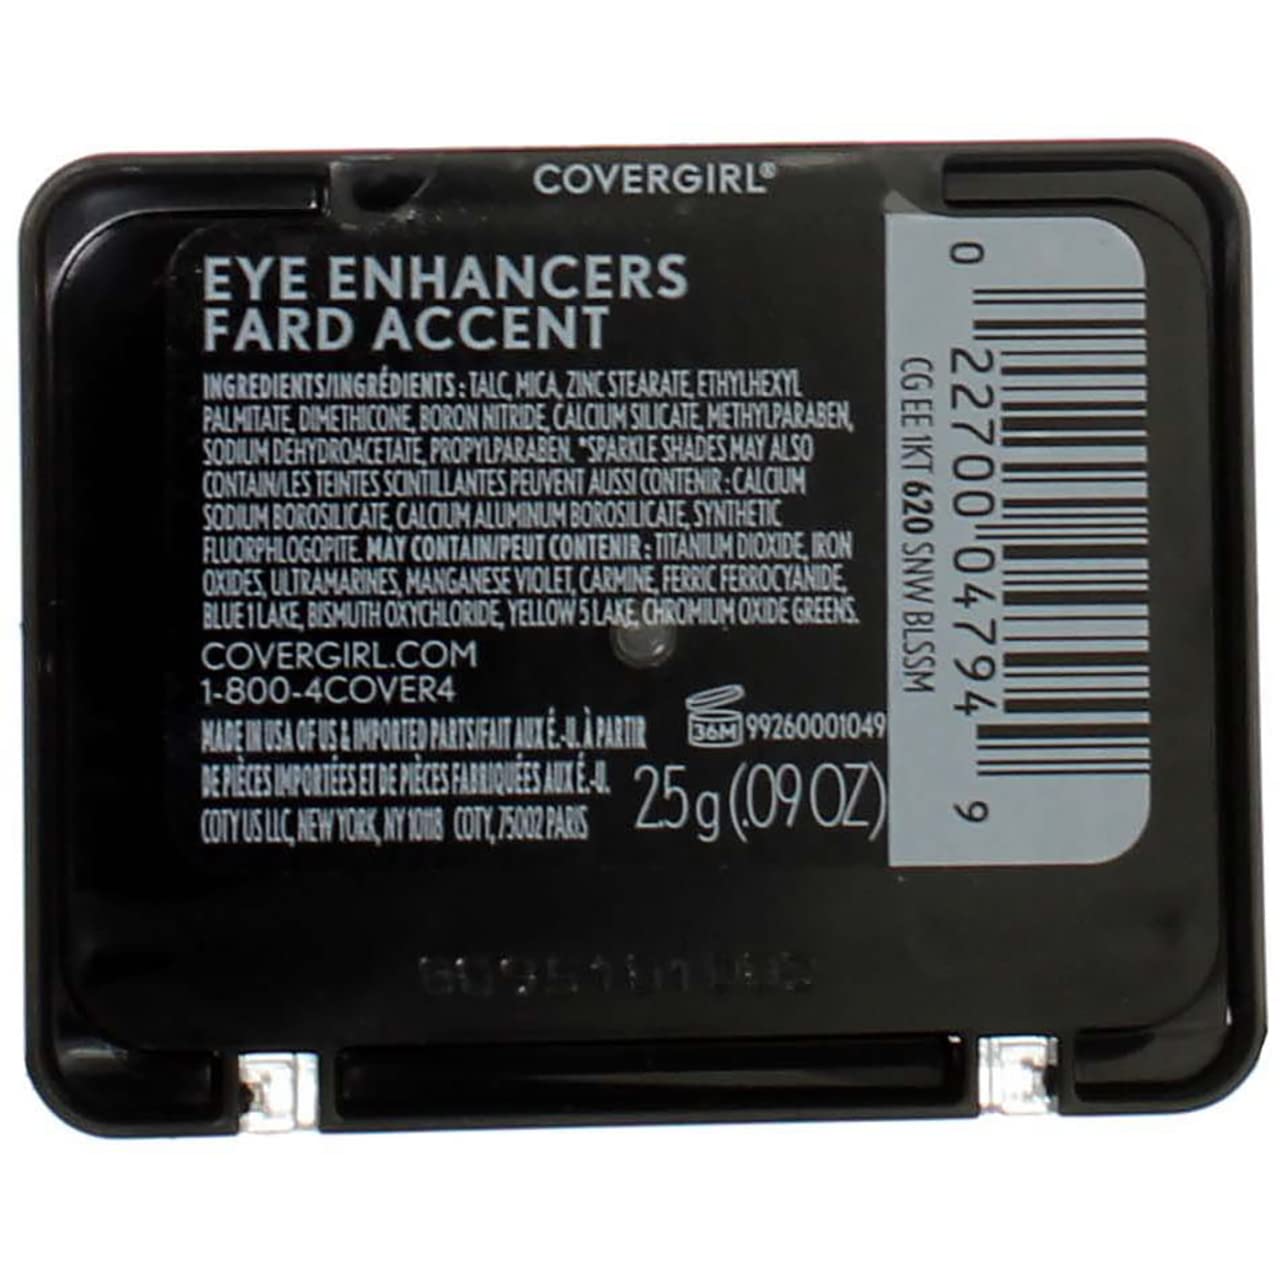 COVERGIRL - Eye Enhancers 1-Kit Eyeshadow, silky, sheer formula, double ended applicator, 100% Cruelty-free